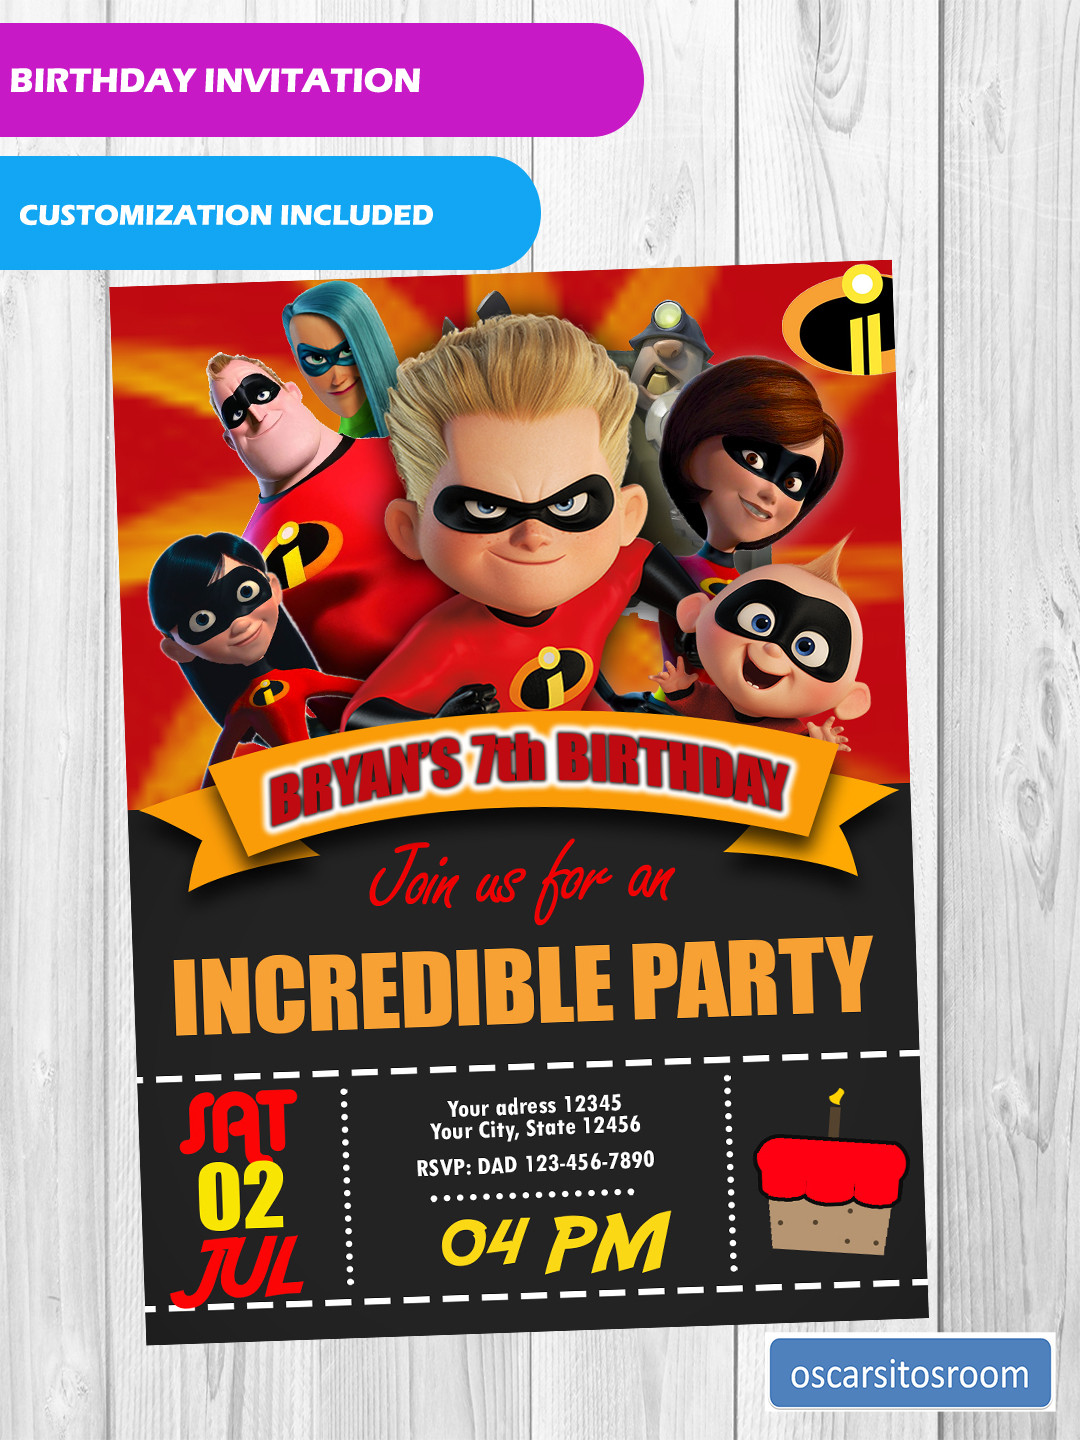 Custom Birthday Party Invitations
 The Incredibles 2 Digital & Printable Custom Birthday